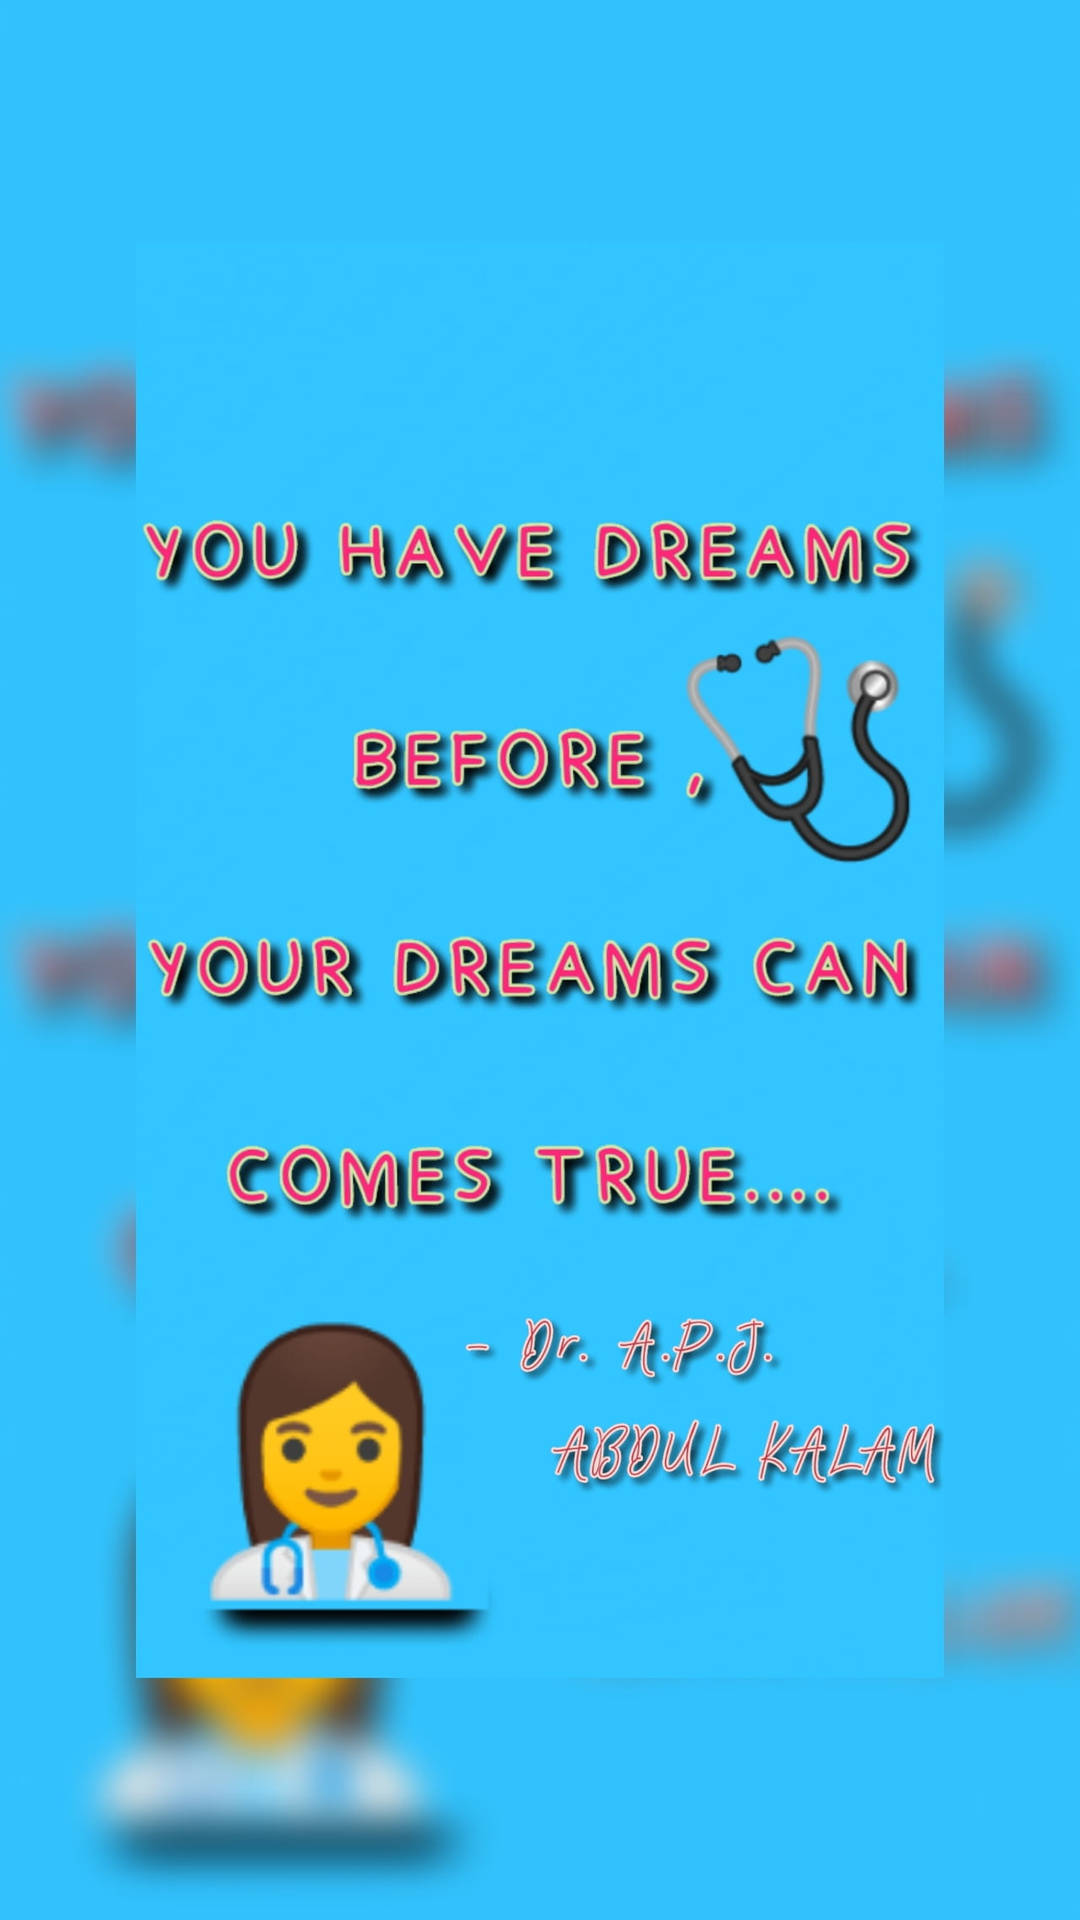 Medical Motivation Poster Dreams Wallpaper